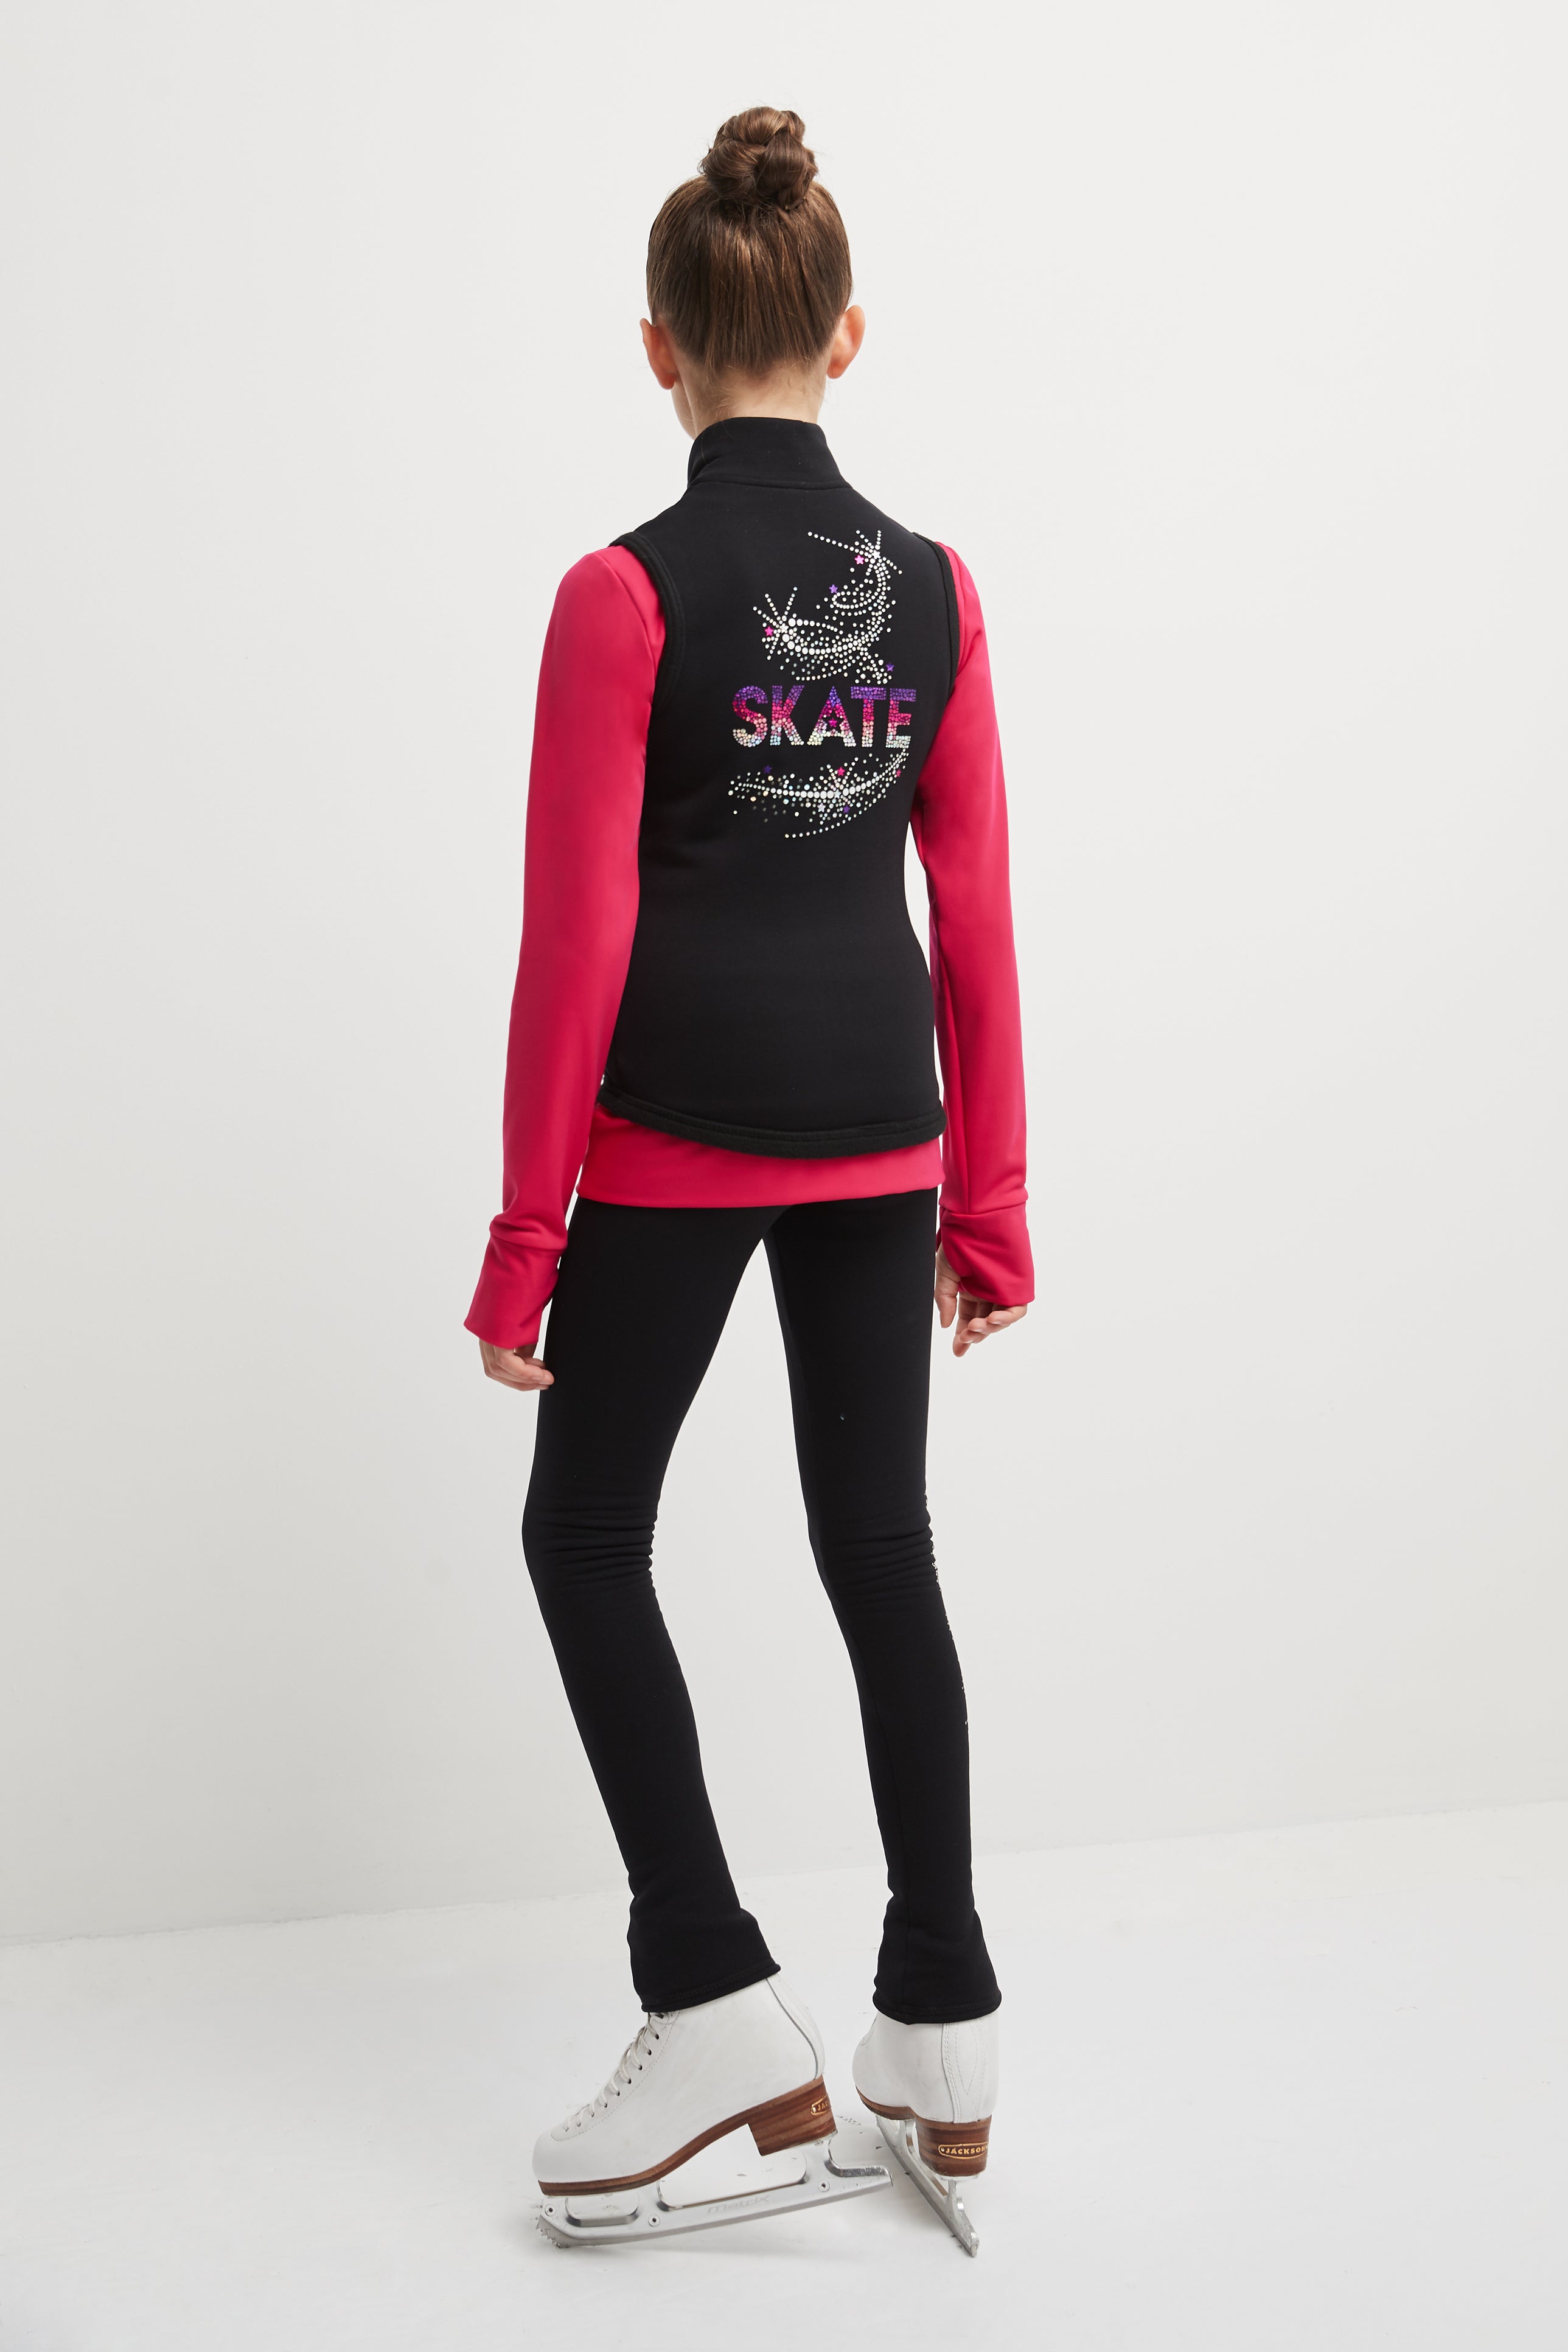 Mondor Skating Jacket with Skate Sequins in Polartec- Girls Sizes